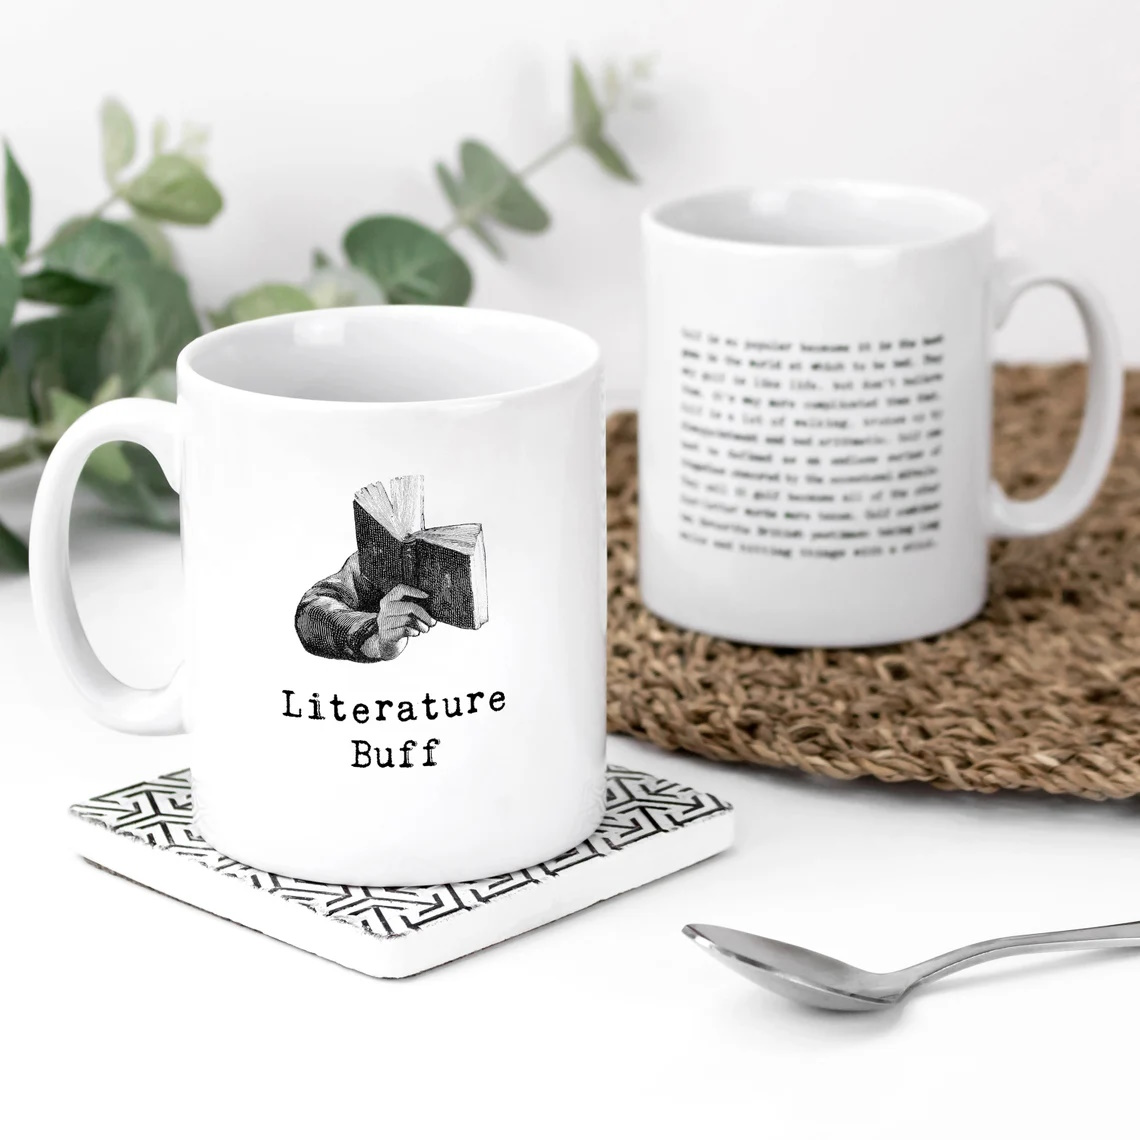 Literature Buff Ceramic Mug